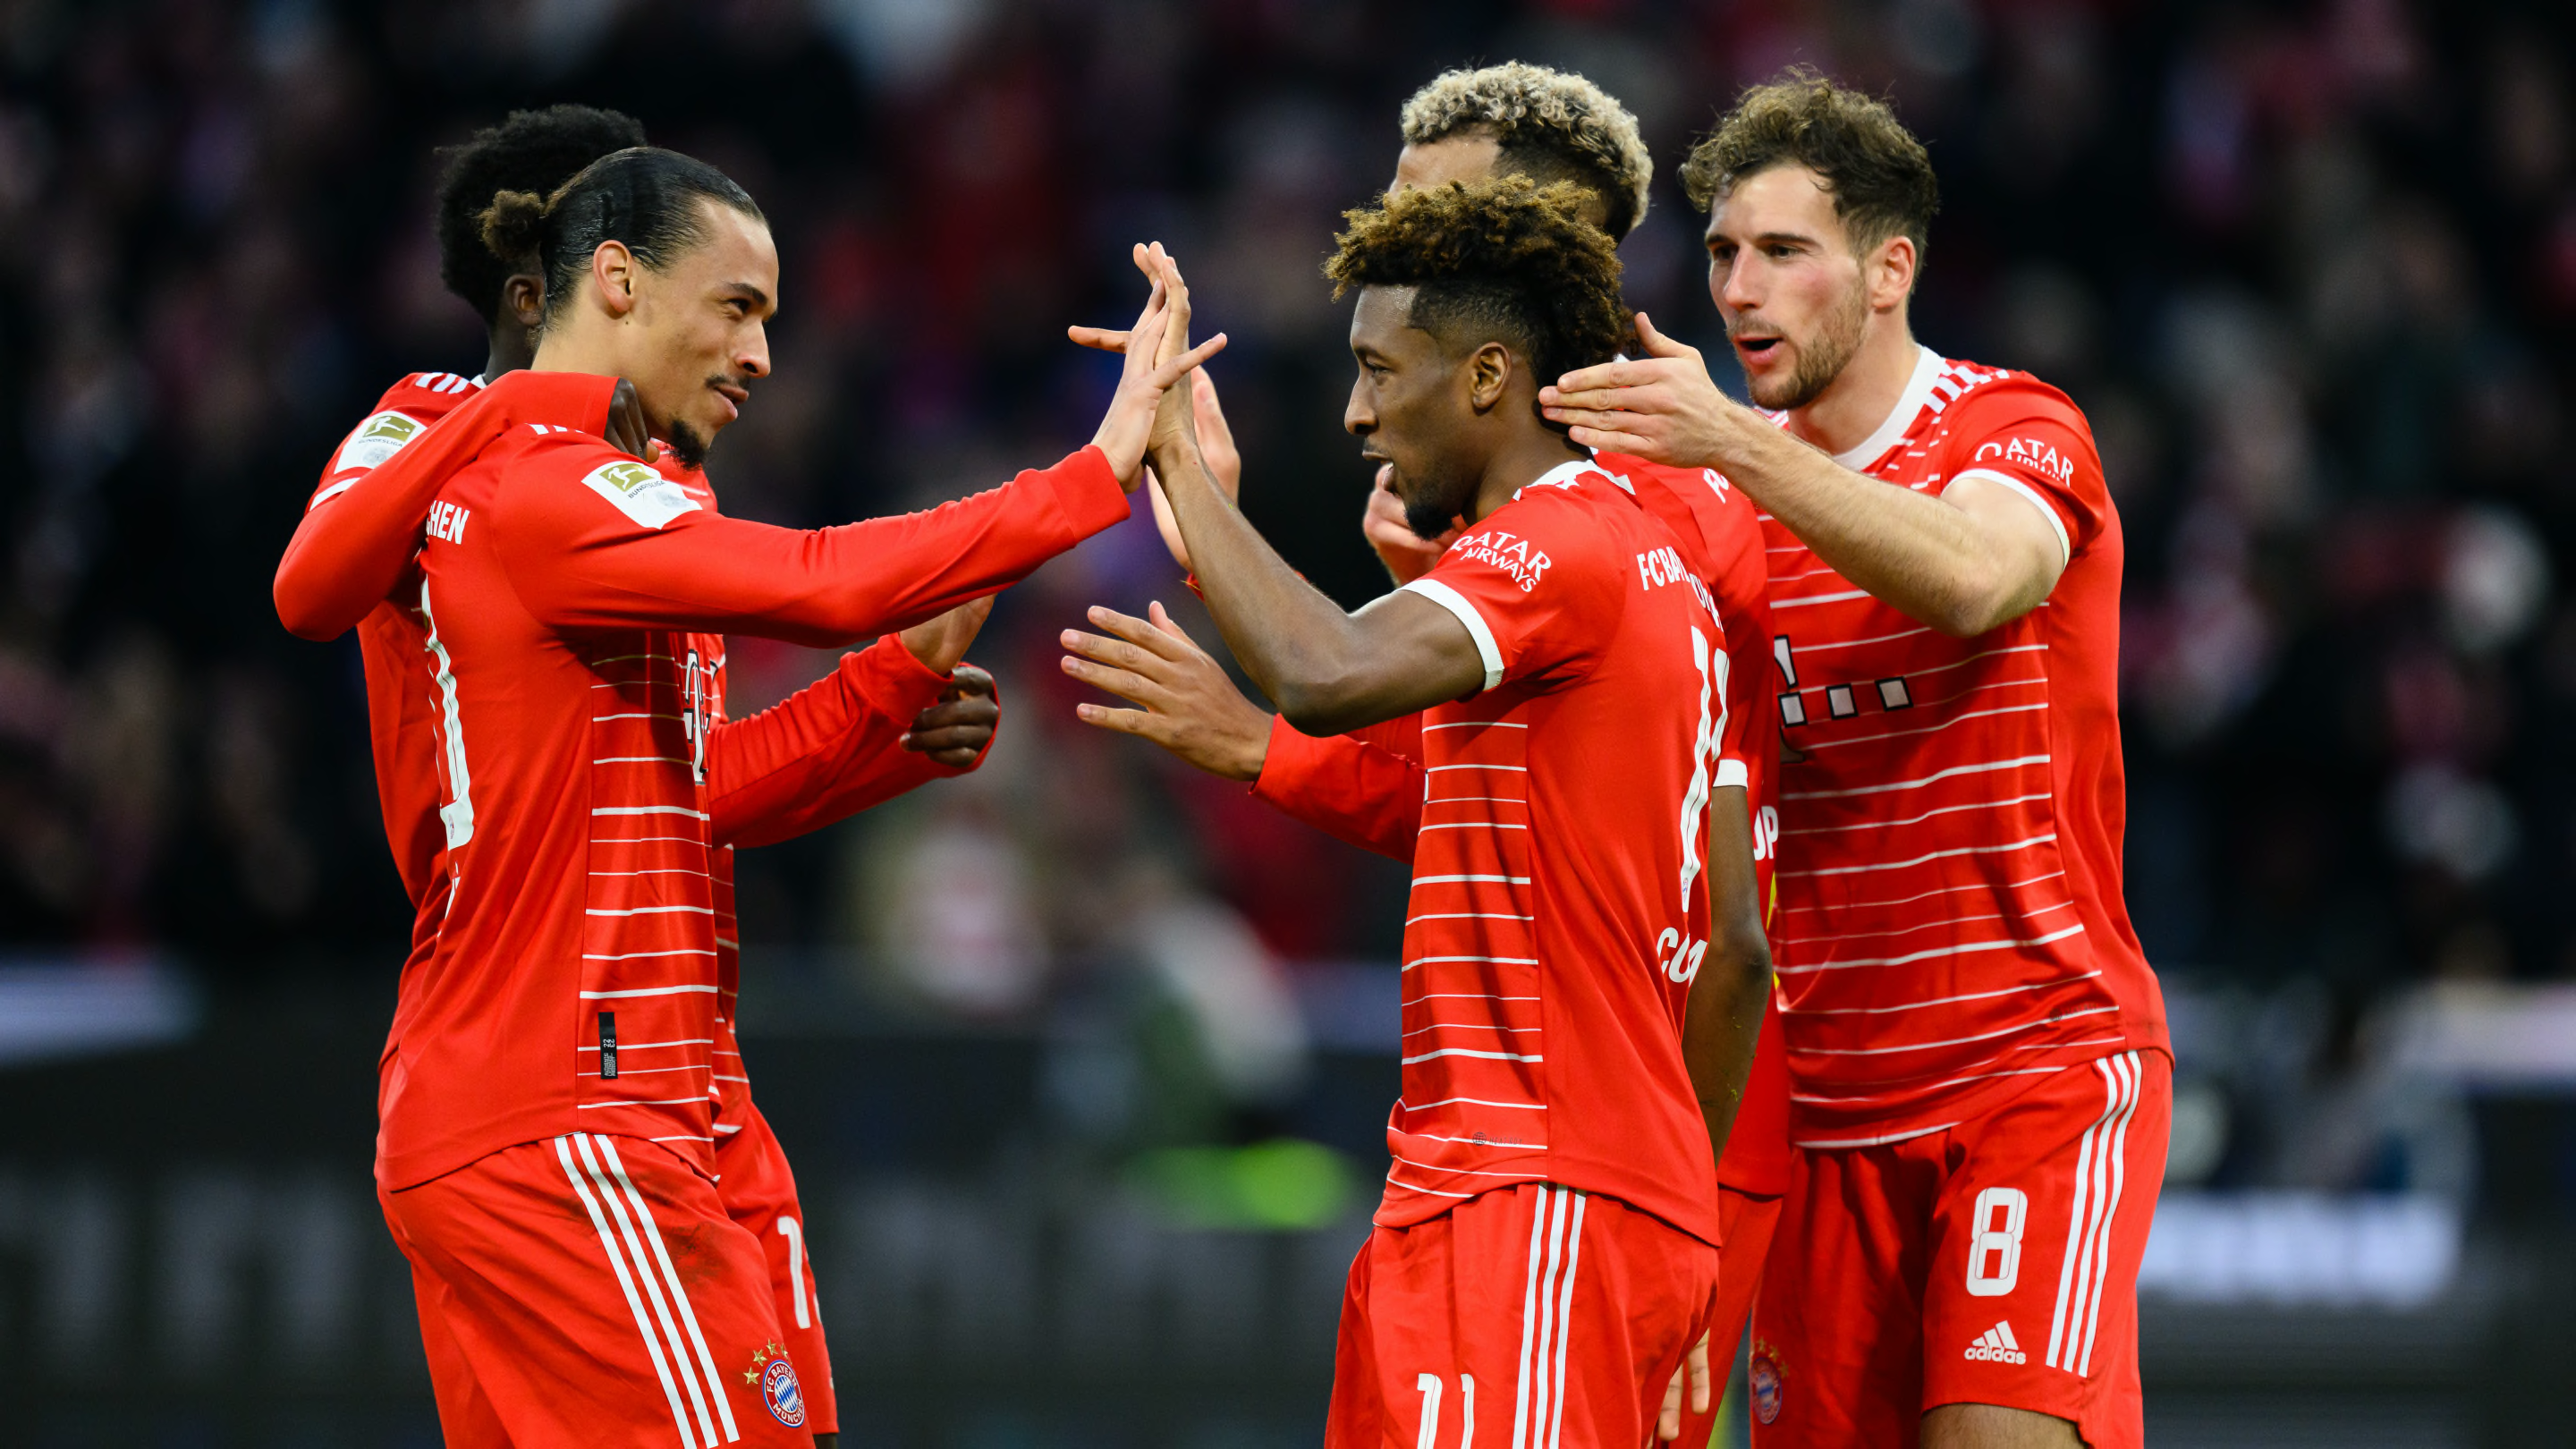 Bayern Munich 4-2 Borussia Dortmund: Player ratings as Tuchel returns with huge win